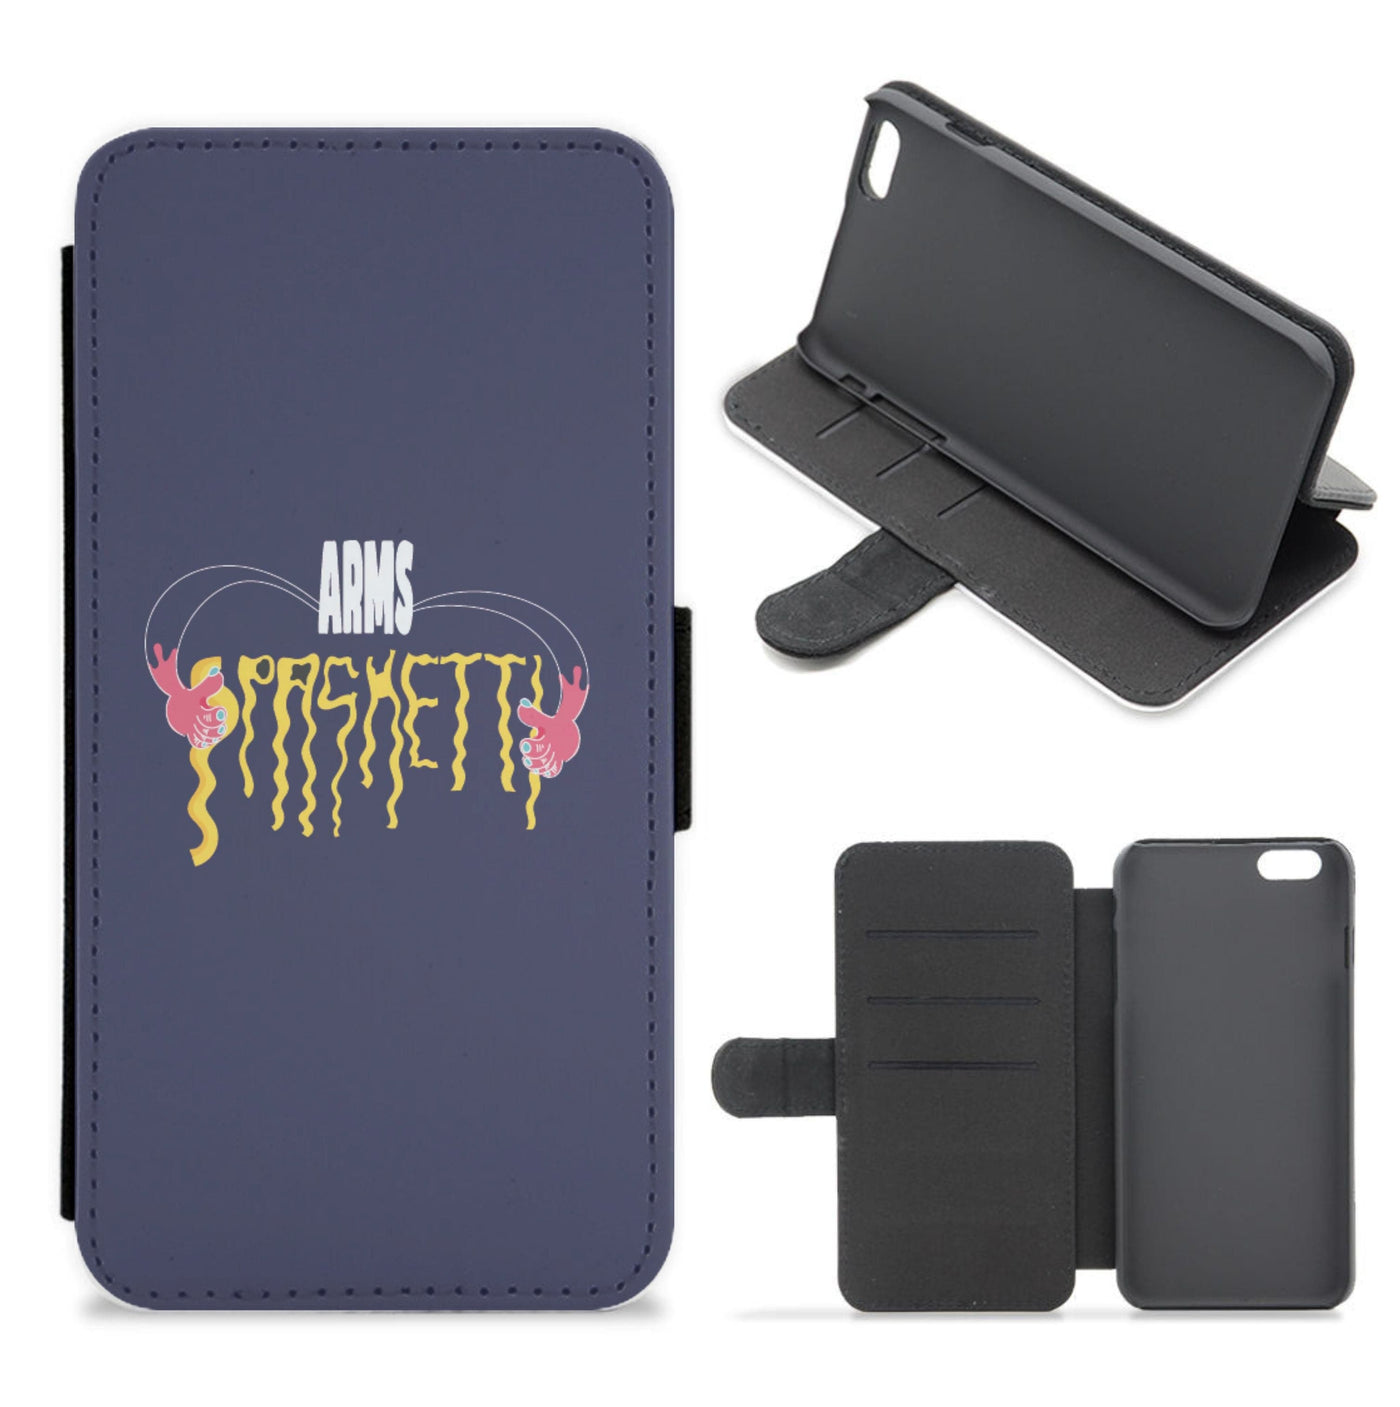 Arms Spaghetti - Dark Blue Flip / Wallet Phone Case